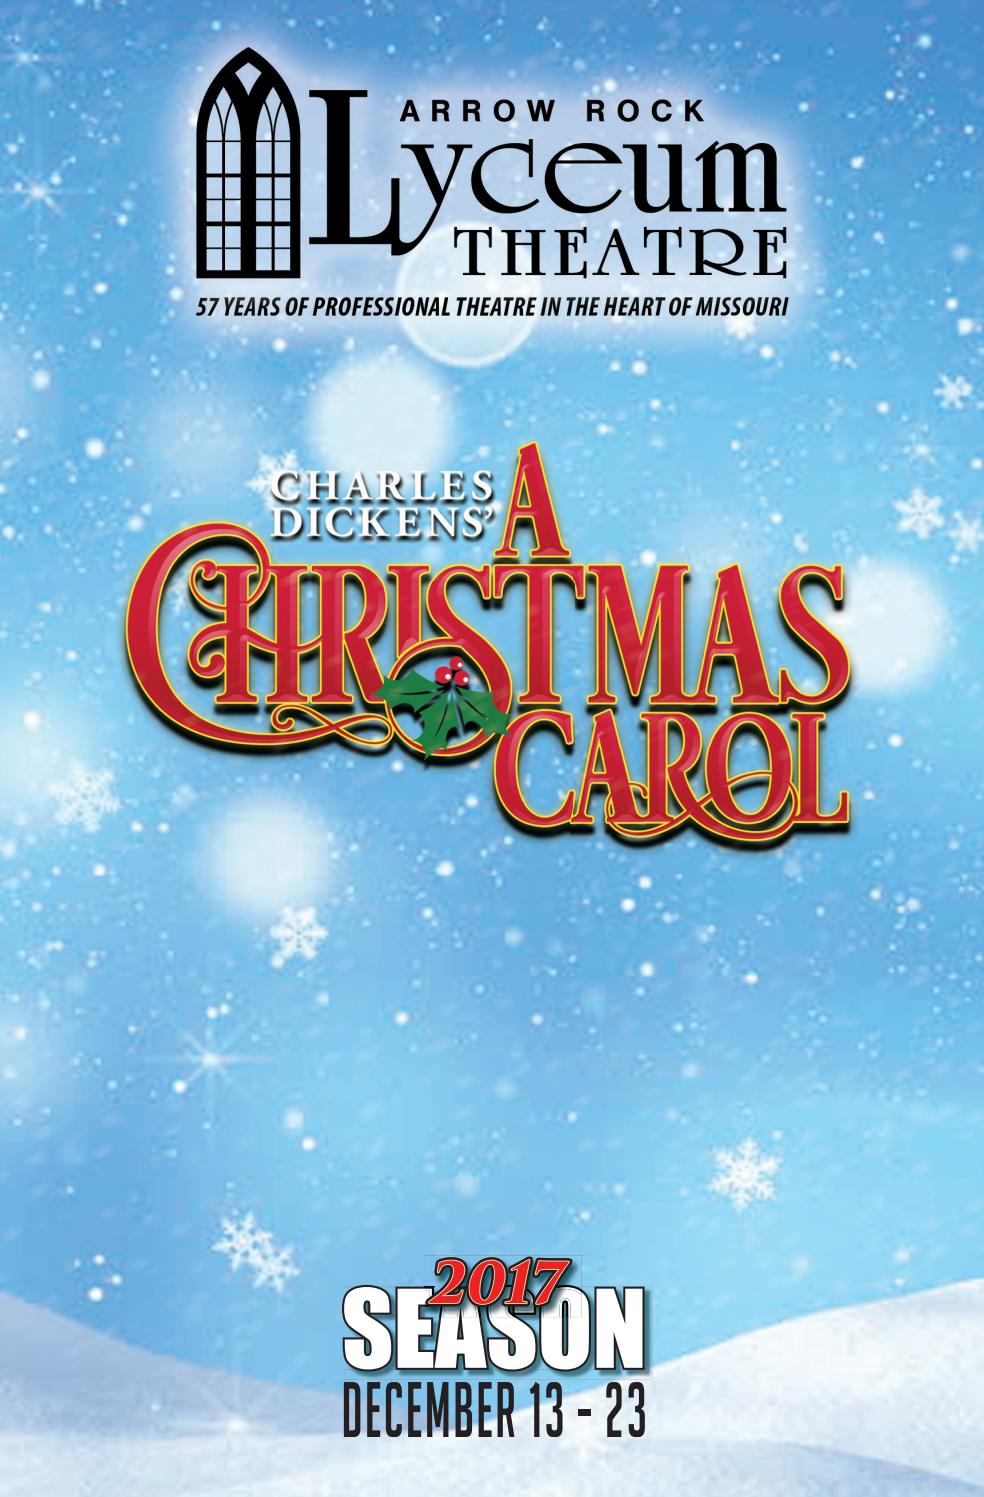 Sommer Garten Einzigartig Lyceum theatre S Charles Dickens A Christmas Carol by Arrow